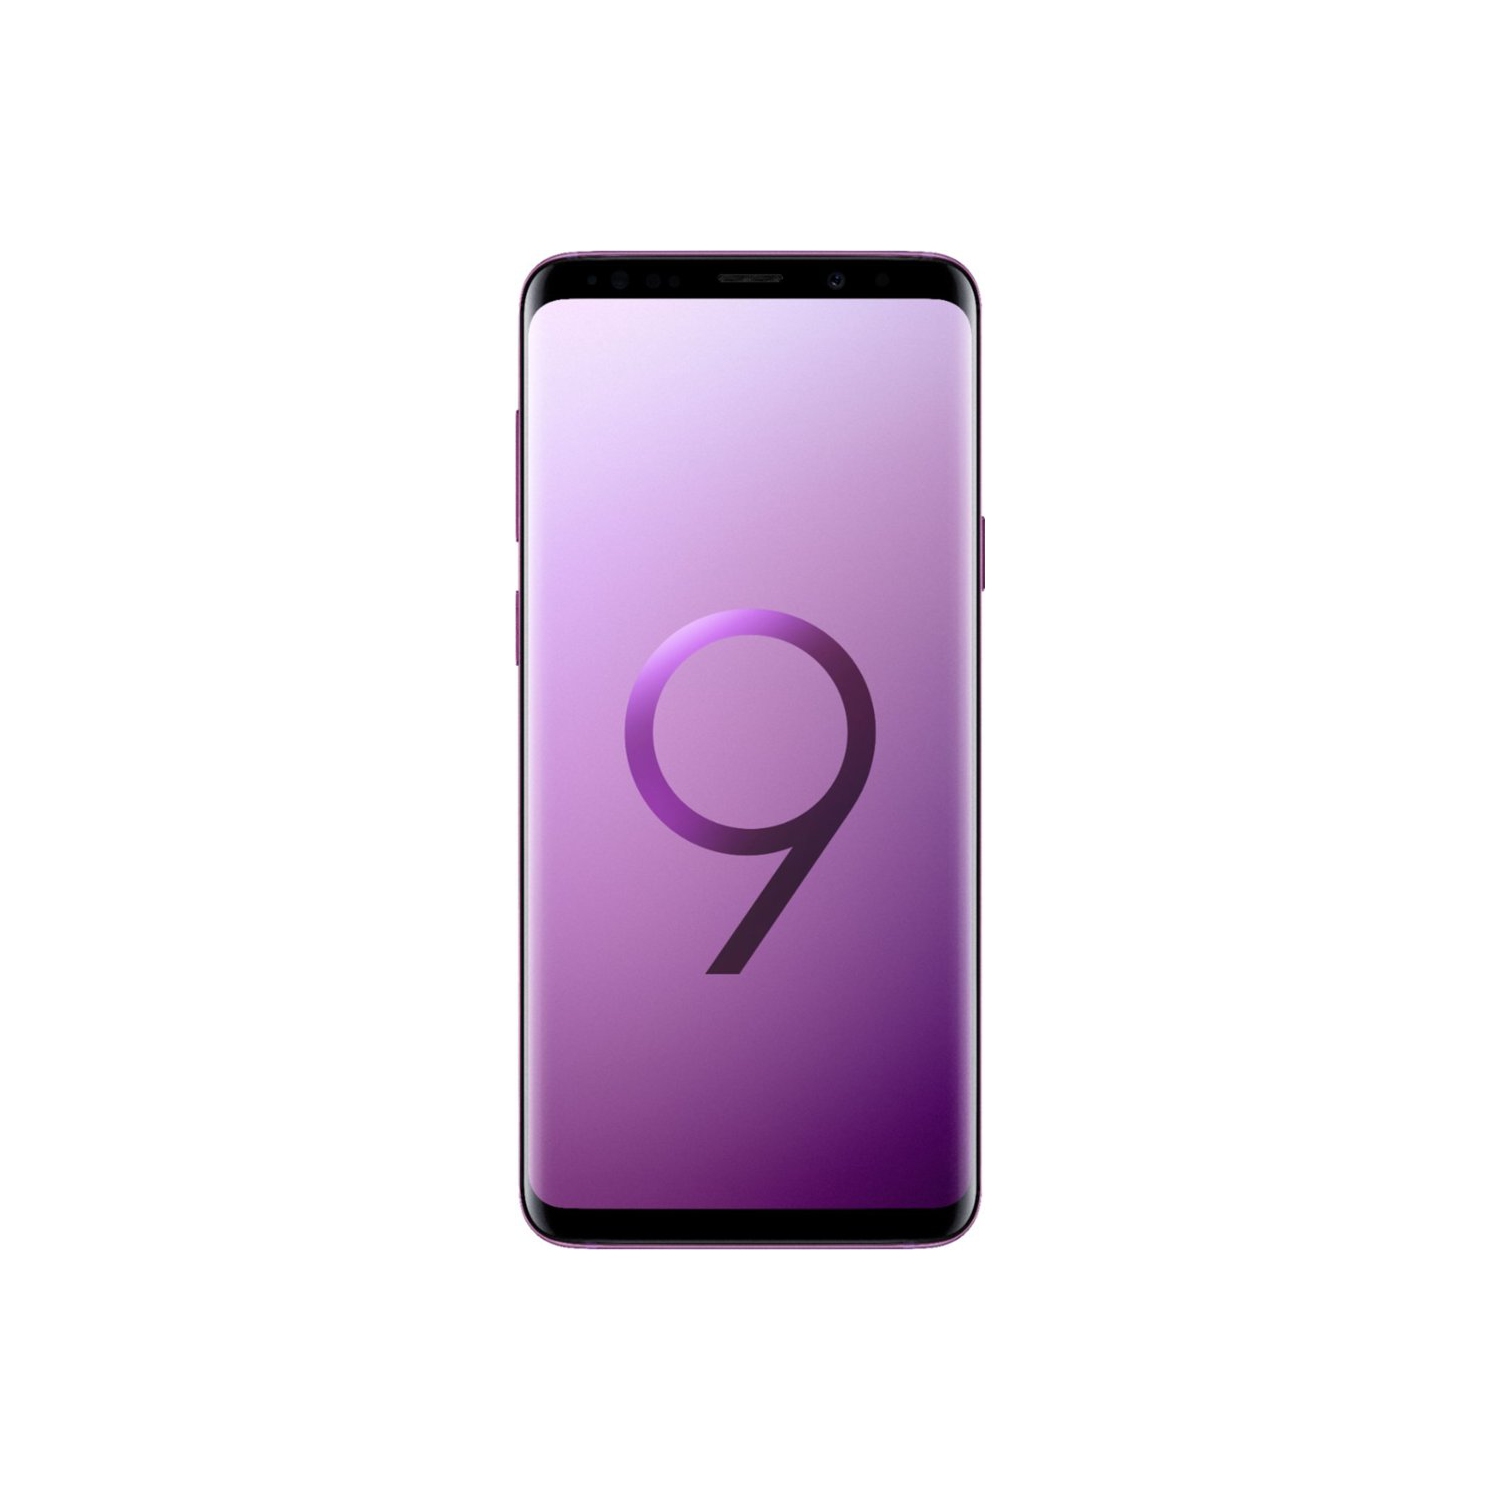 Refurbished (Excellent) - Samsung Galaxy S9+ 64GB Smartphone - Lilac Purple - Unlocked - Certified Refurbished